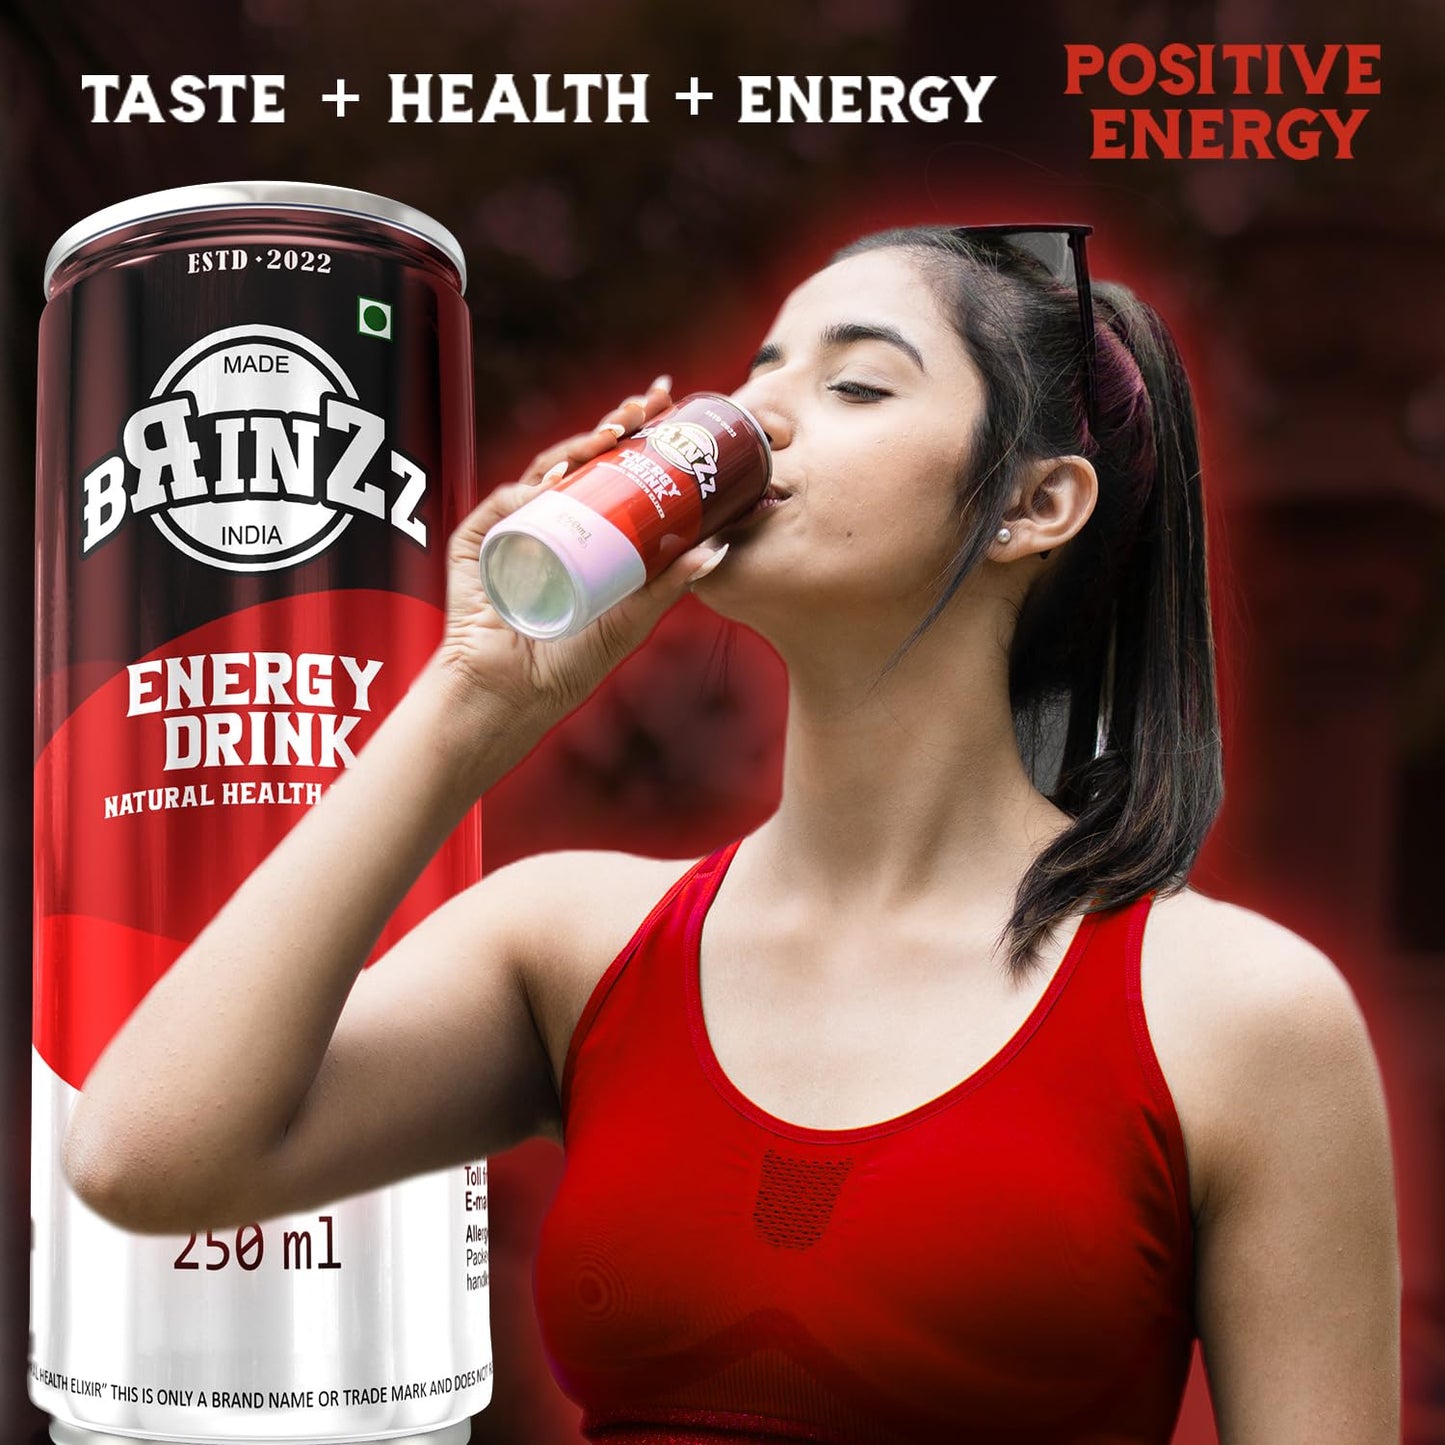 Brinzz Energy Drink Natural Health Elixir 250ml